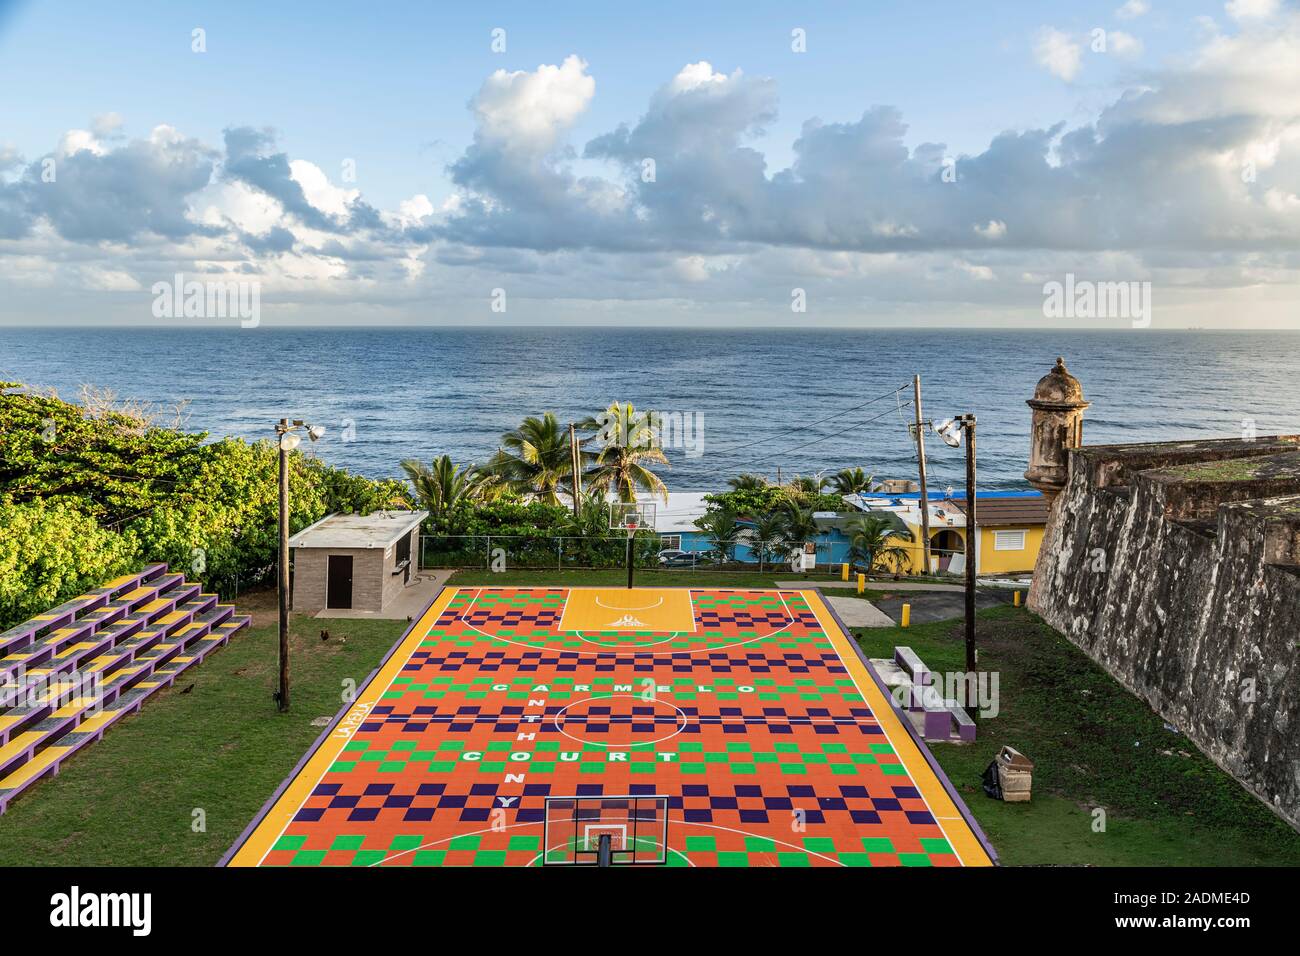 Carmelo Anthony basketball court, La Perla barrio, Old San Juan, Puerto Rico Stock Photo